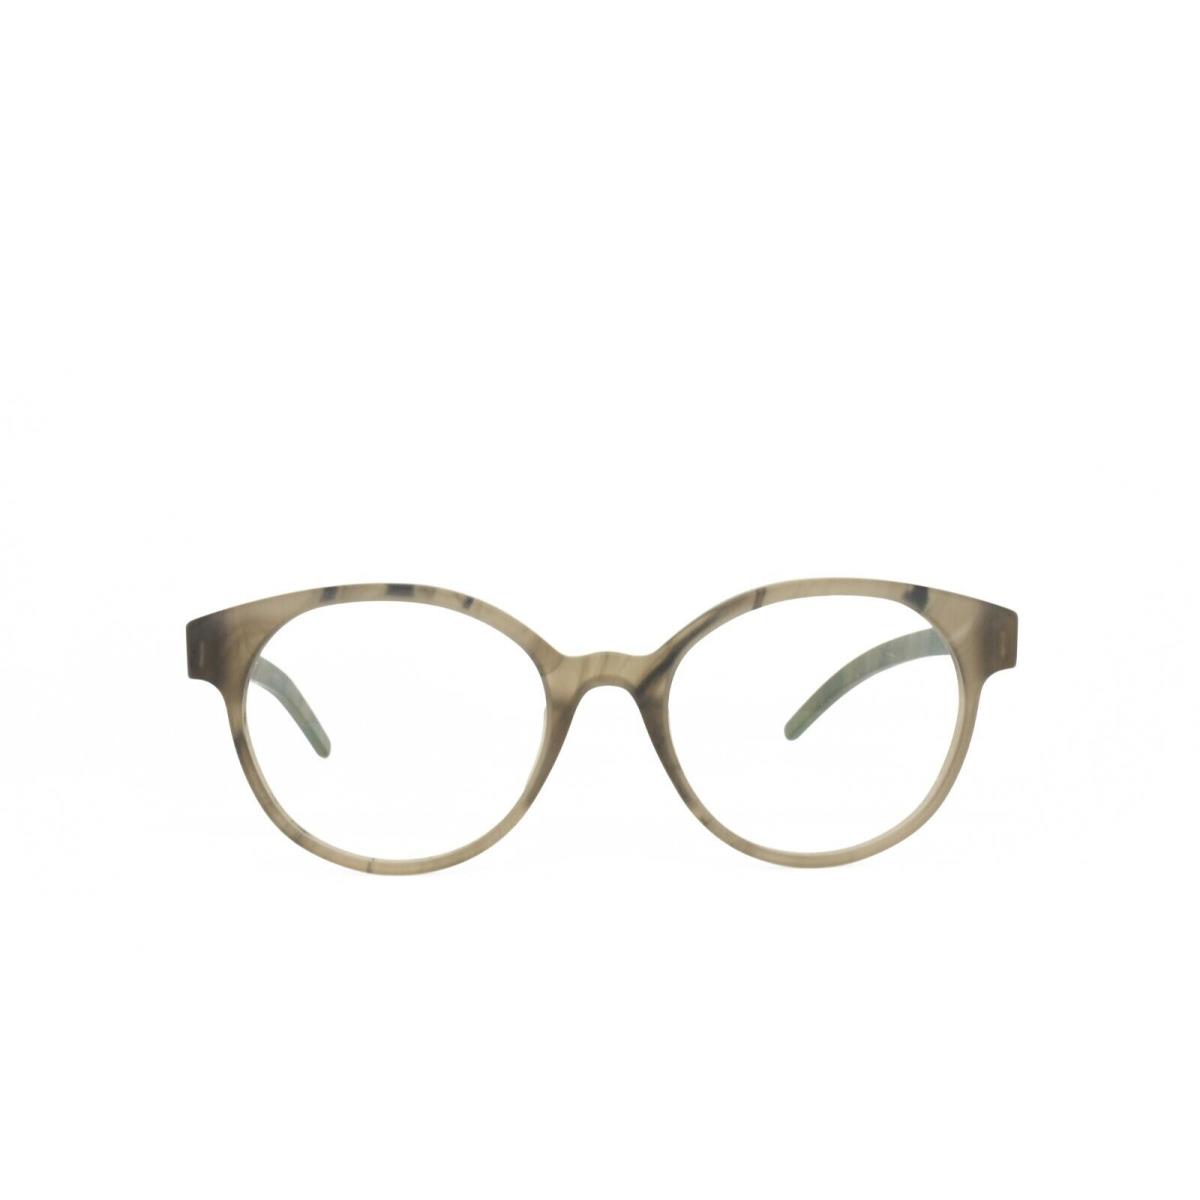 iC Berlin Eyeglasses Julia S. Bronze Driftwood Matte 51-20-145